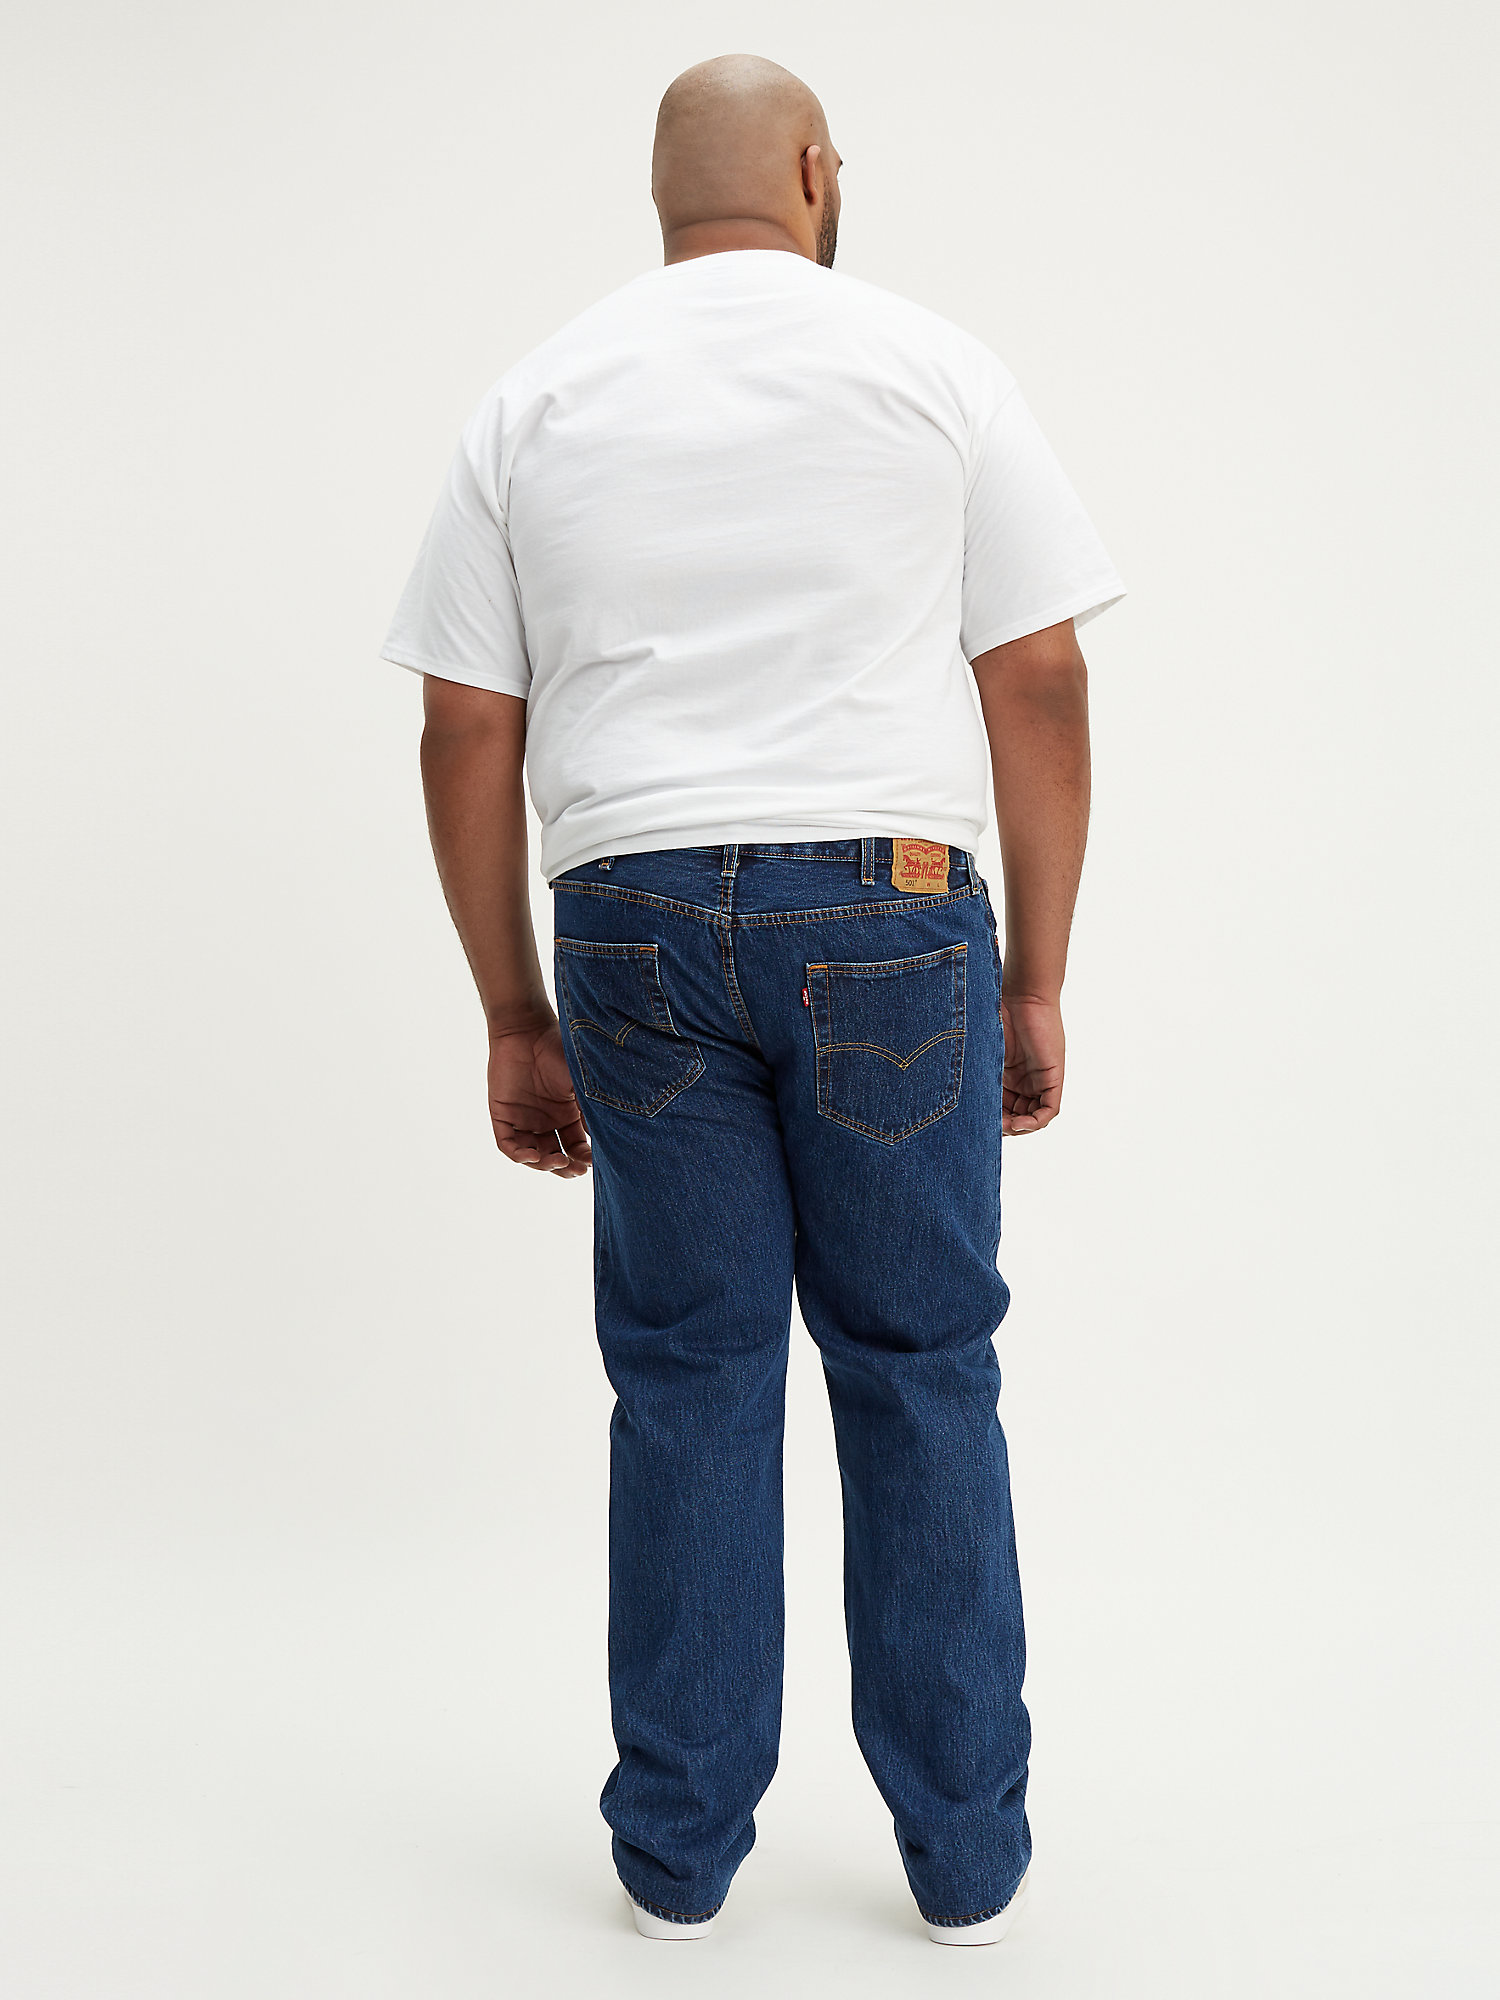 Levi's Men's Big & Tall 501 Original Fit Jeans - image 2 of 6